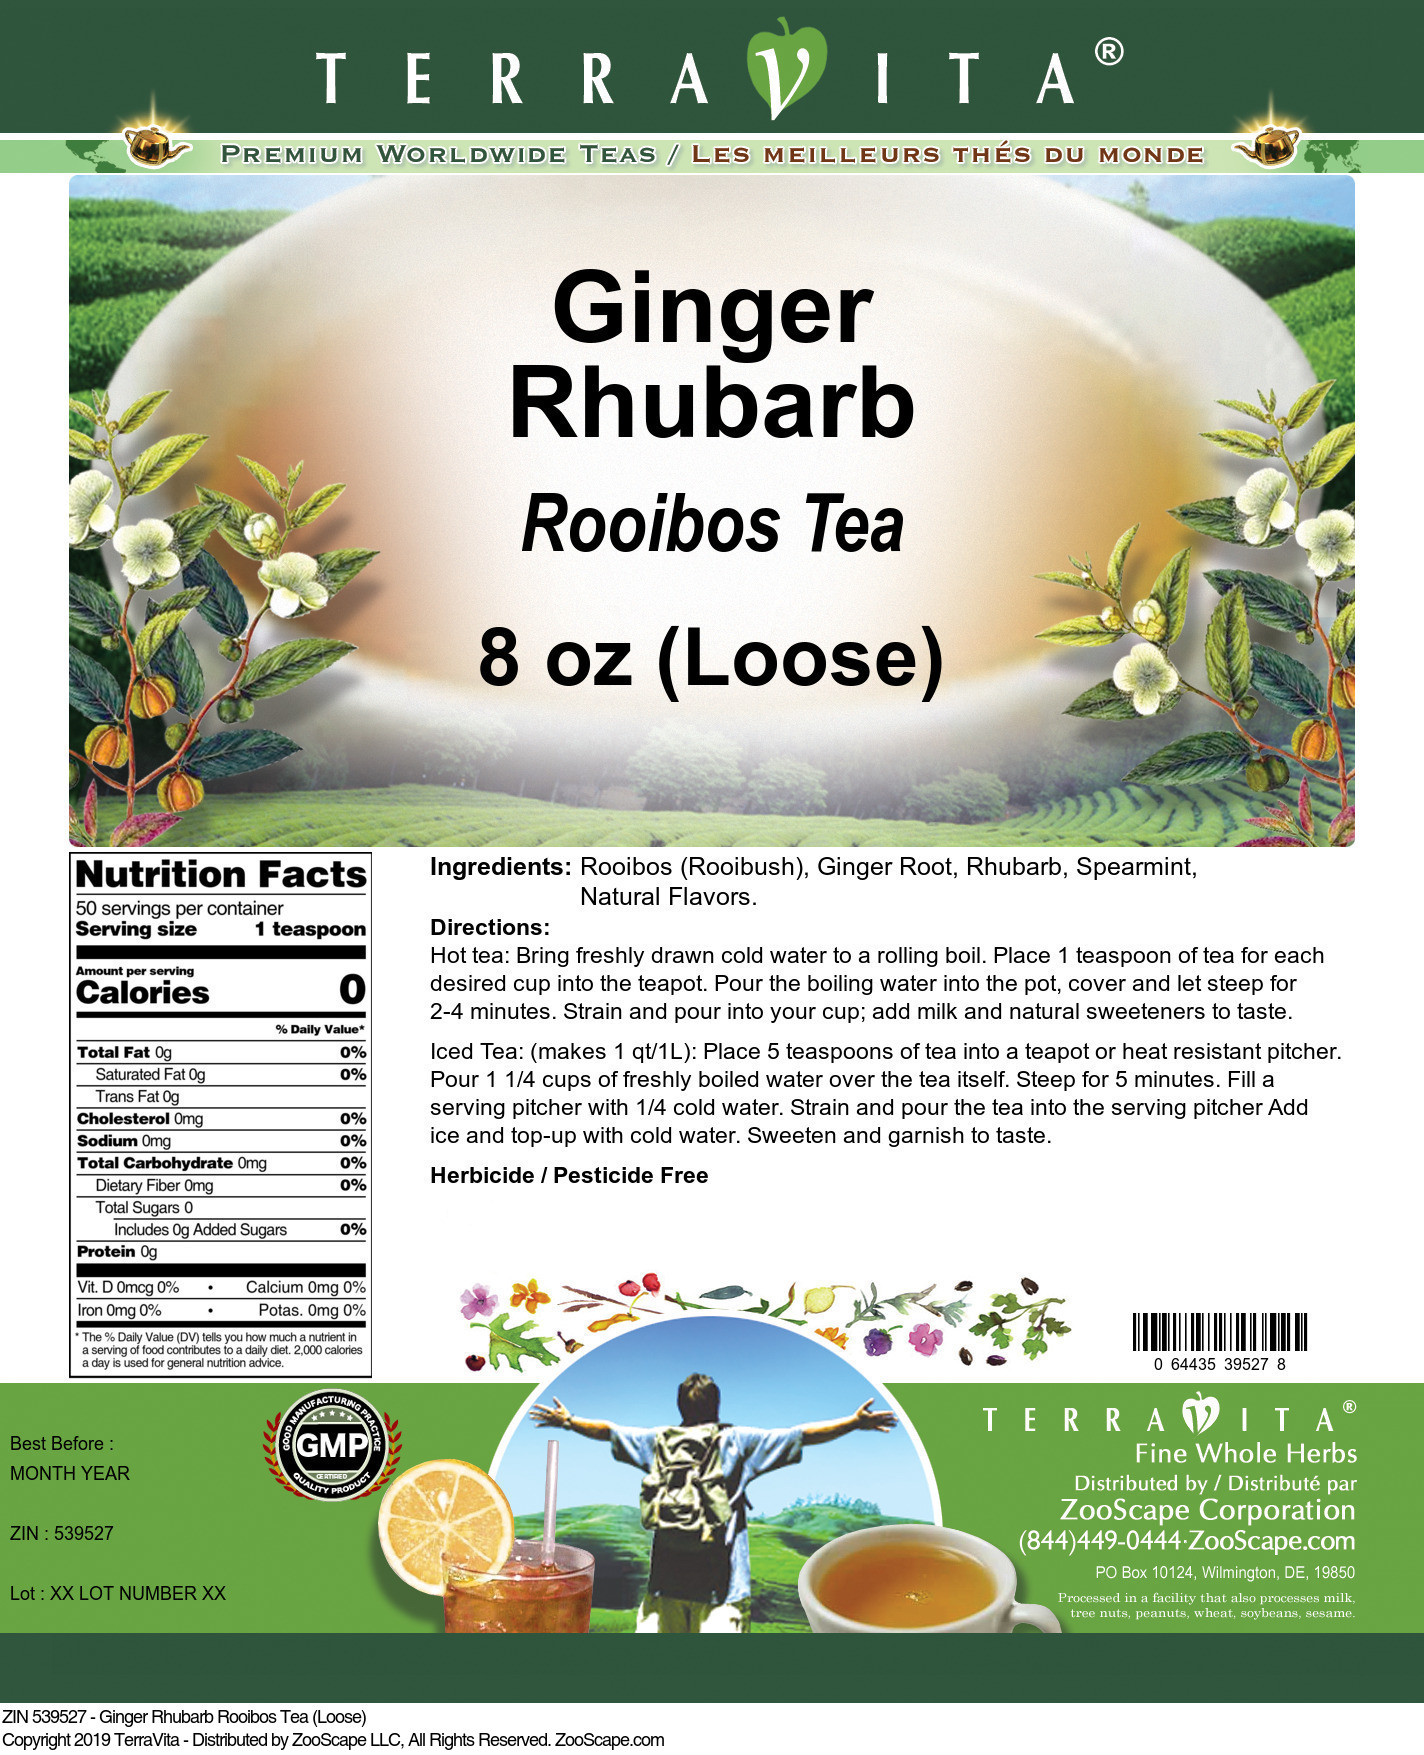 Ginger Rhubarb Rooibos Tea (Loose) - Label